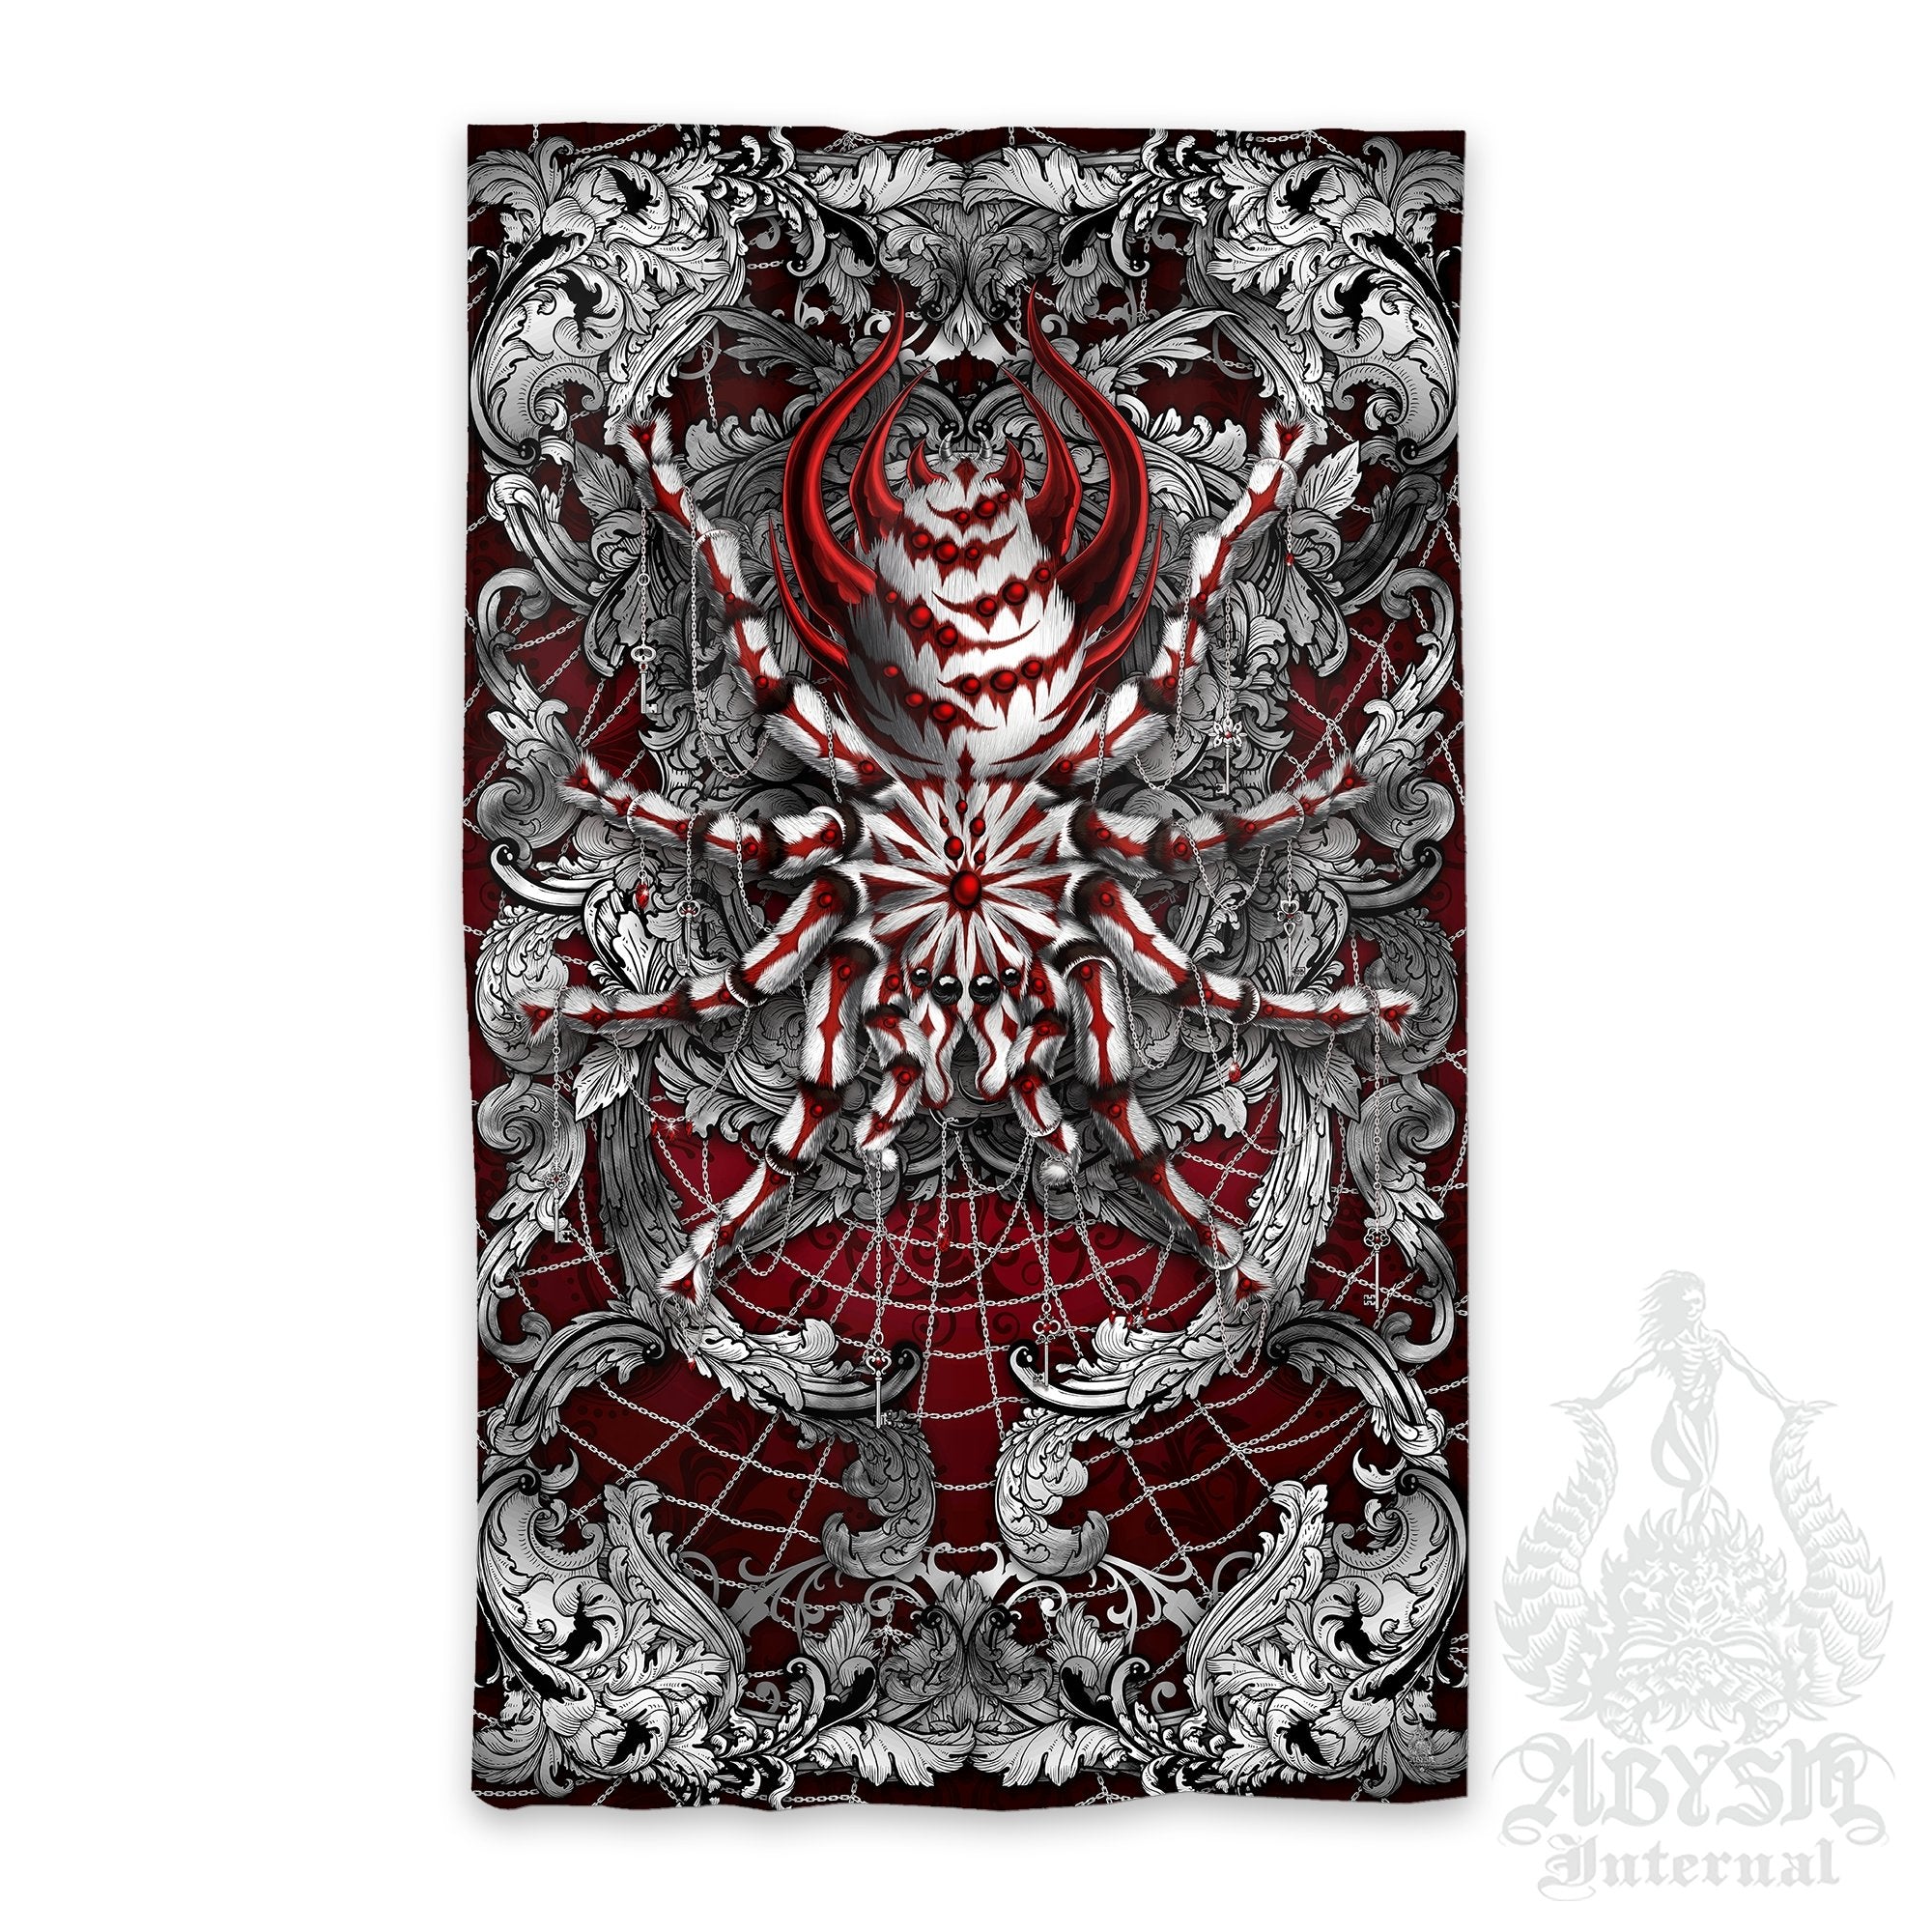 Spider Blackout Curtains, Long Window Panels, Goth Art Print, Fantasy Room Decor - Tarantula, Silver Red - Abysm Internal